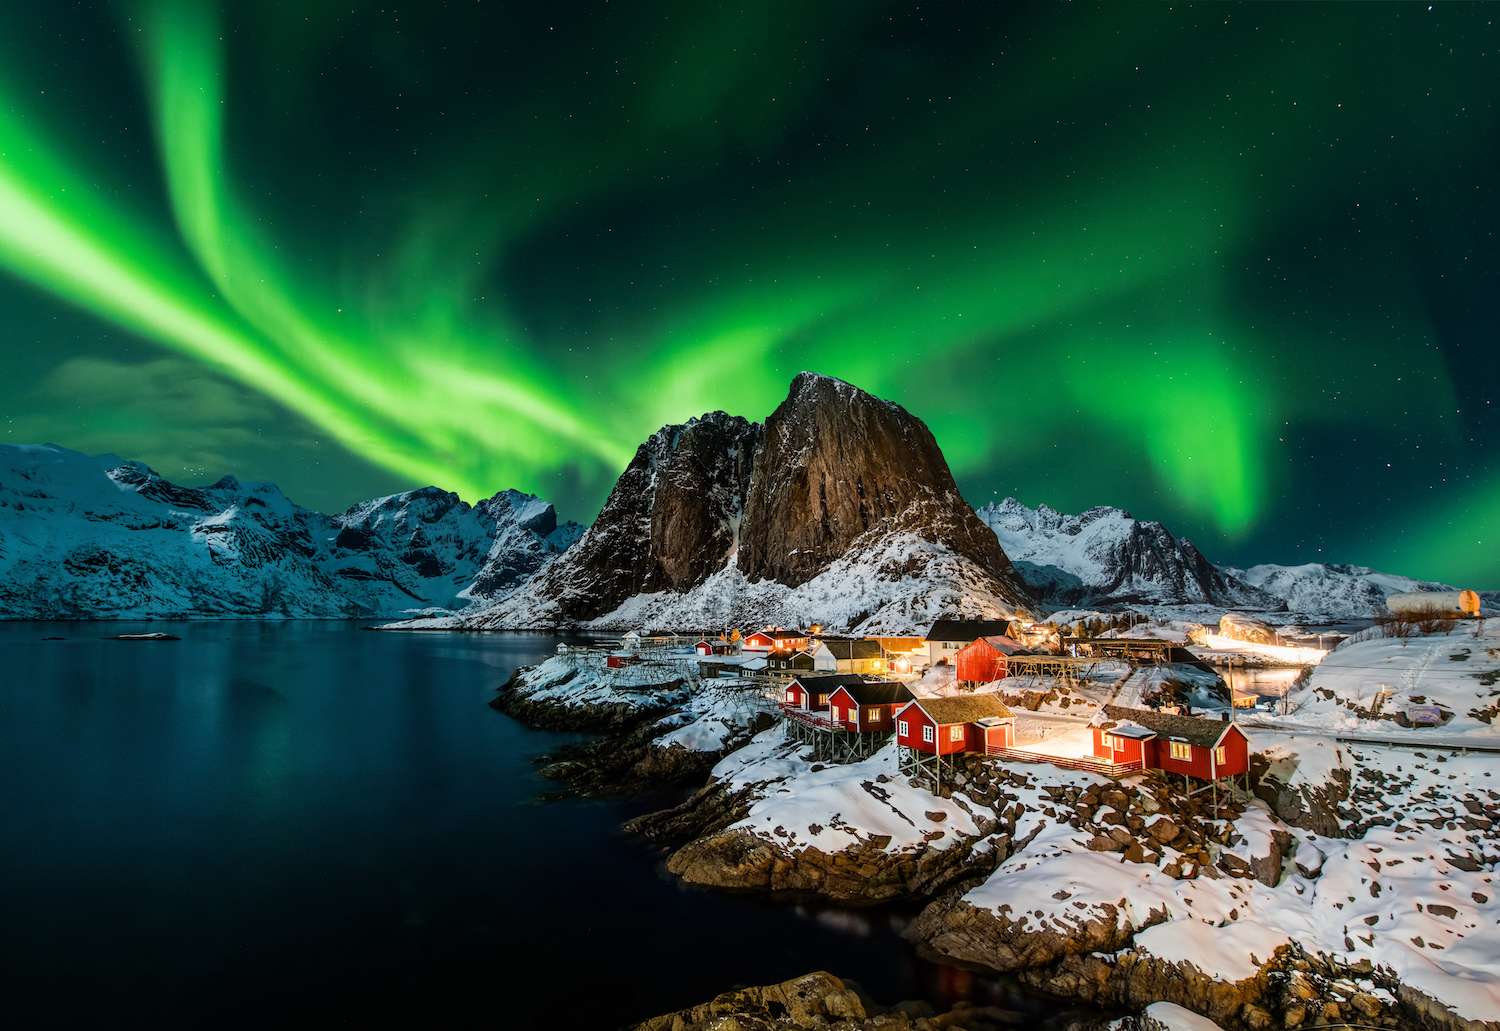 Lofoten Islands Norway with the Aurora borealis